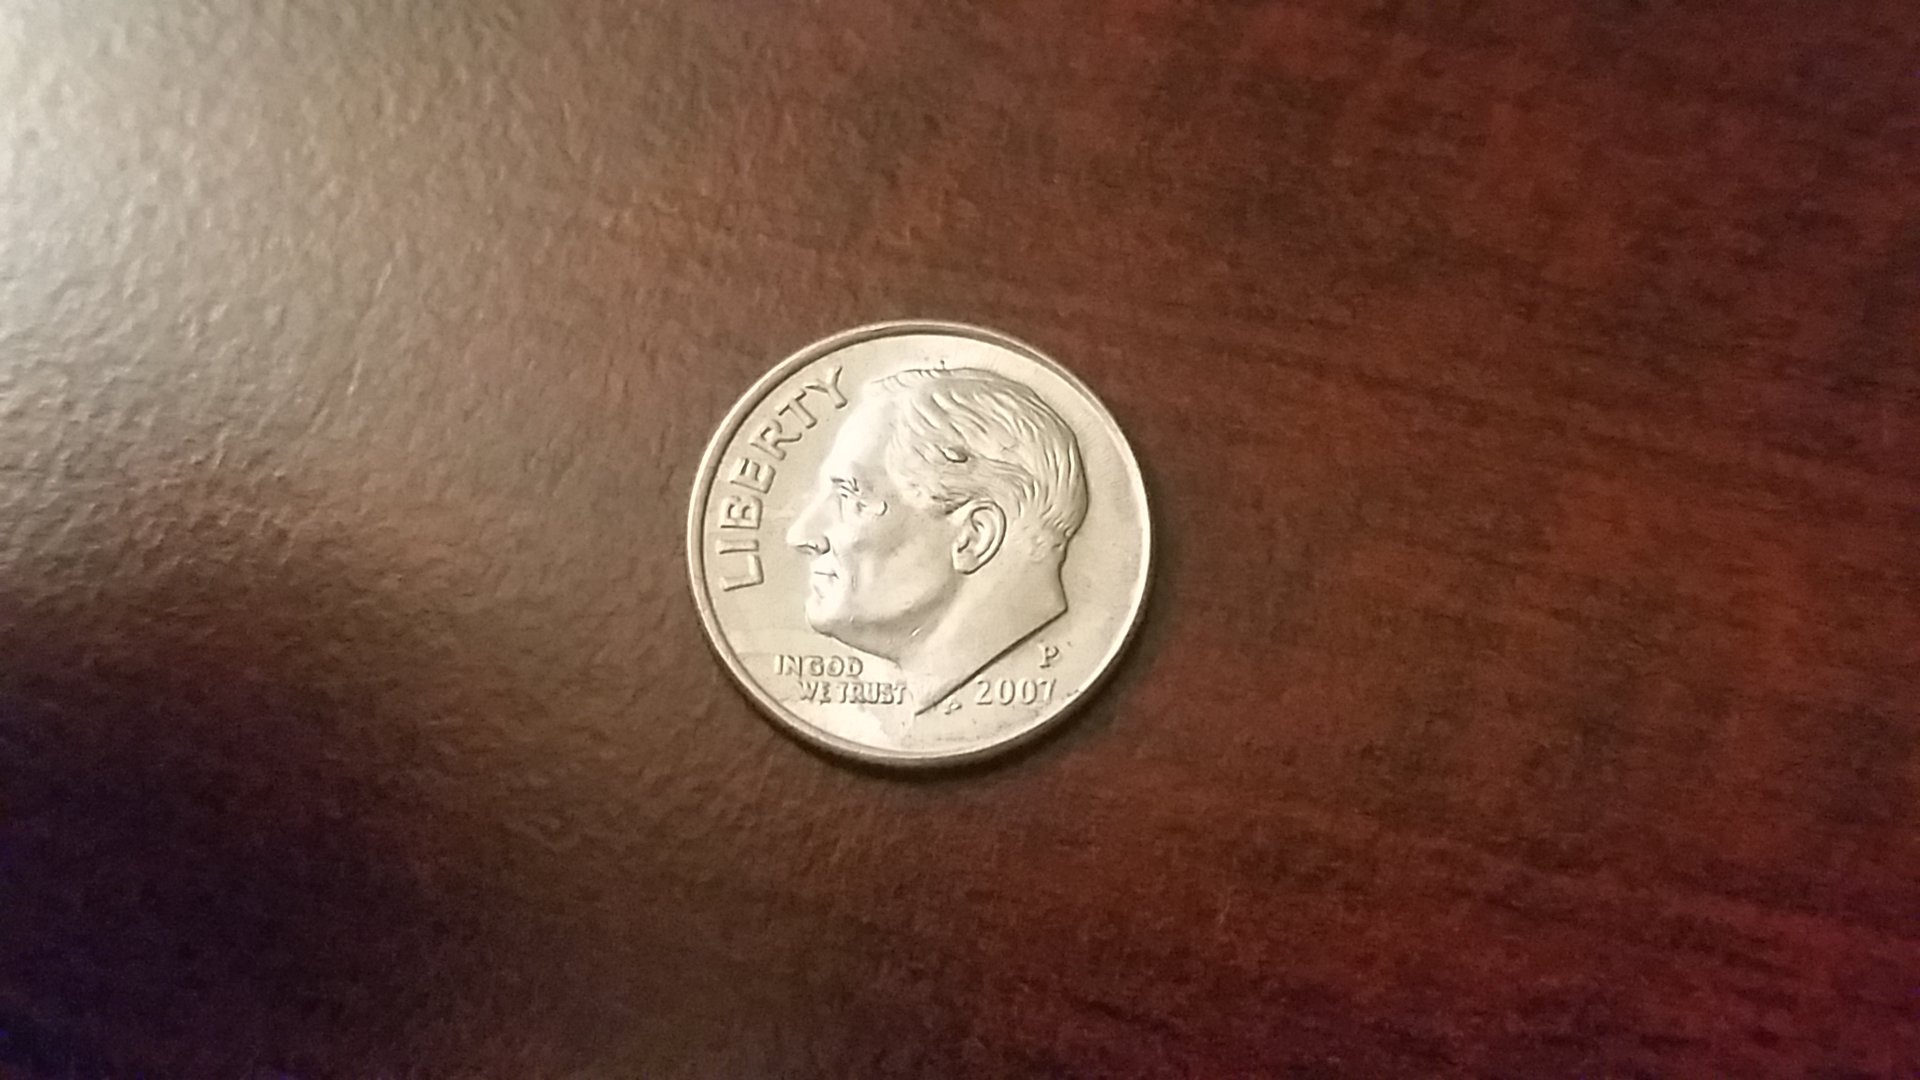 Roosevelt Head Bump | Coin Talk